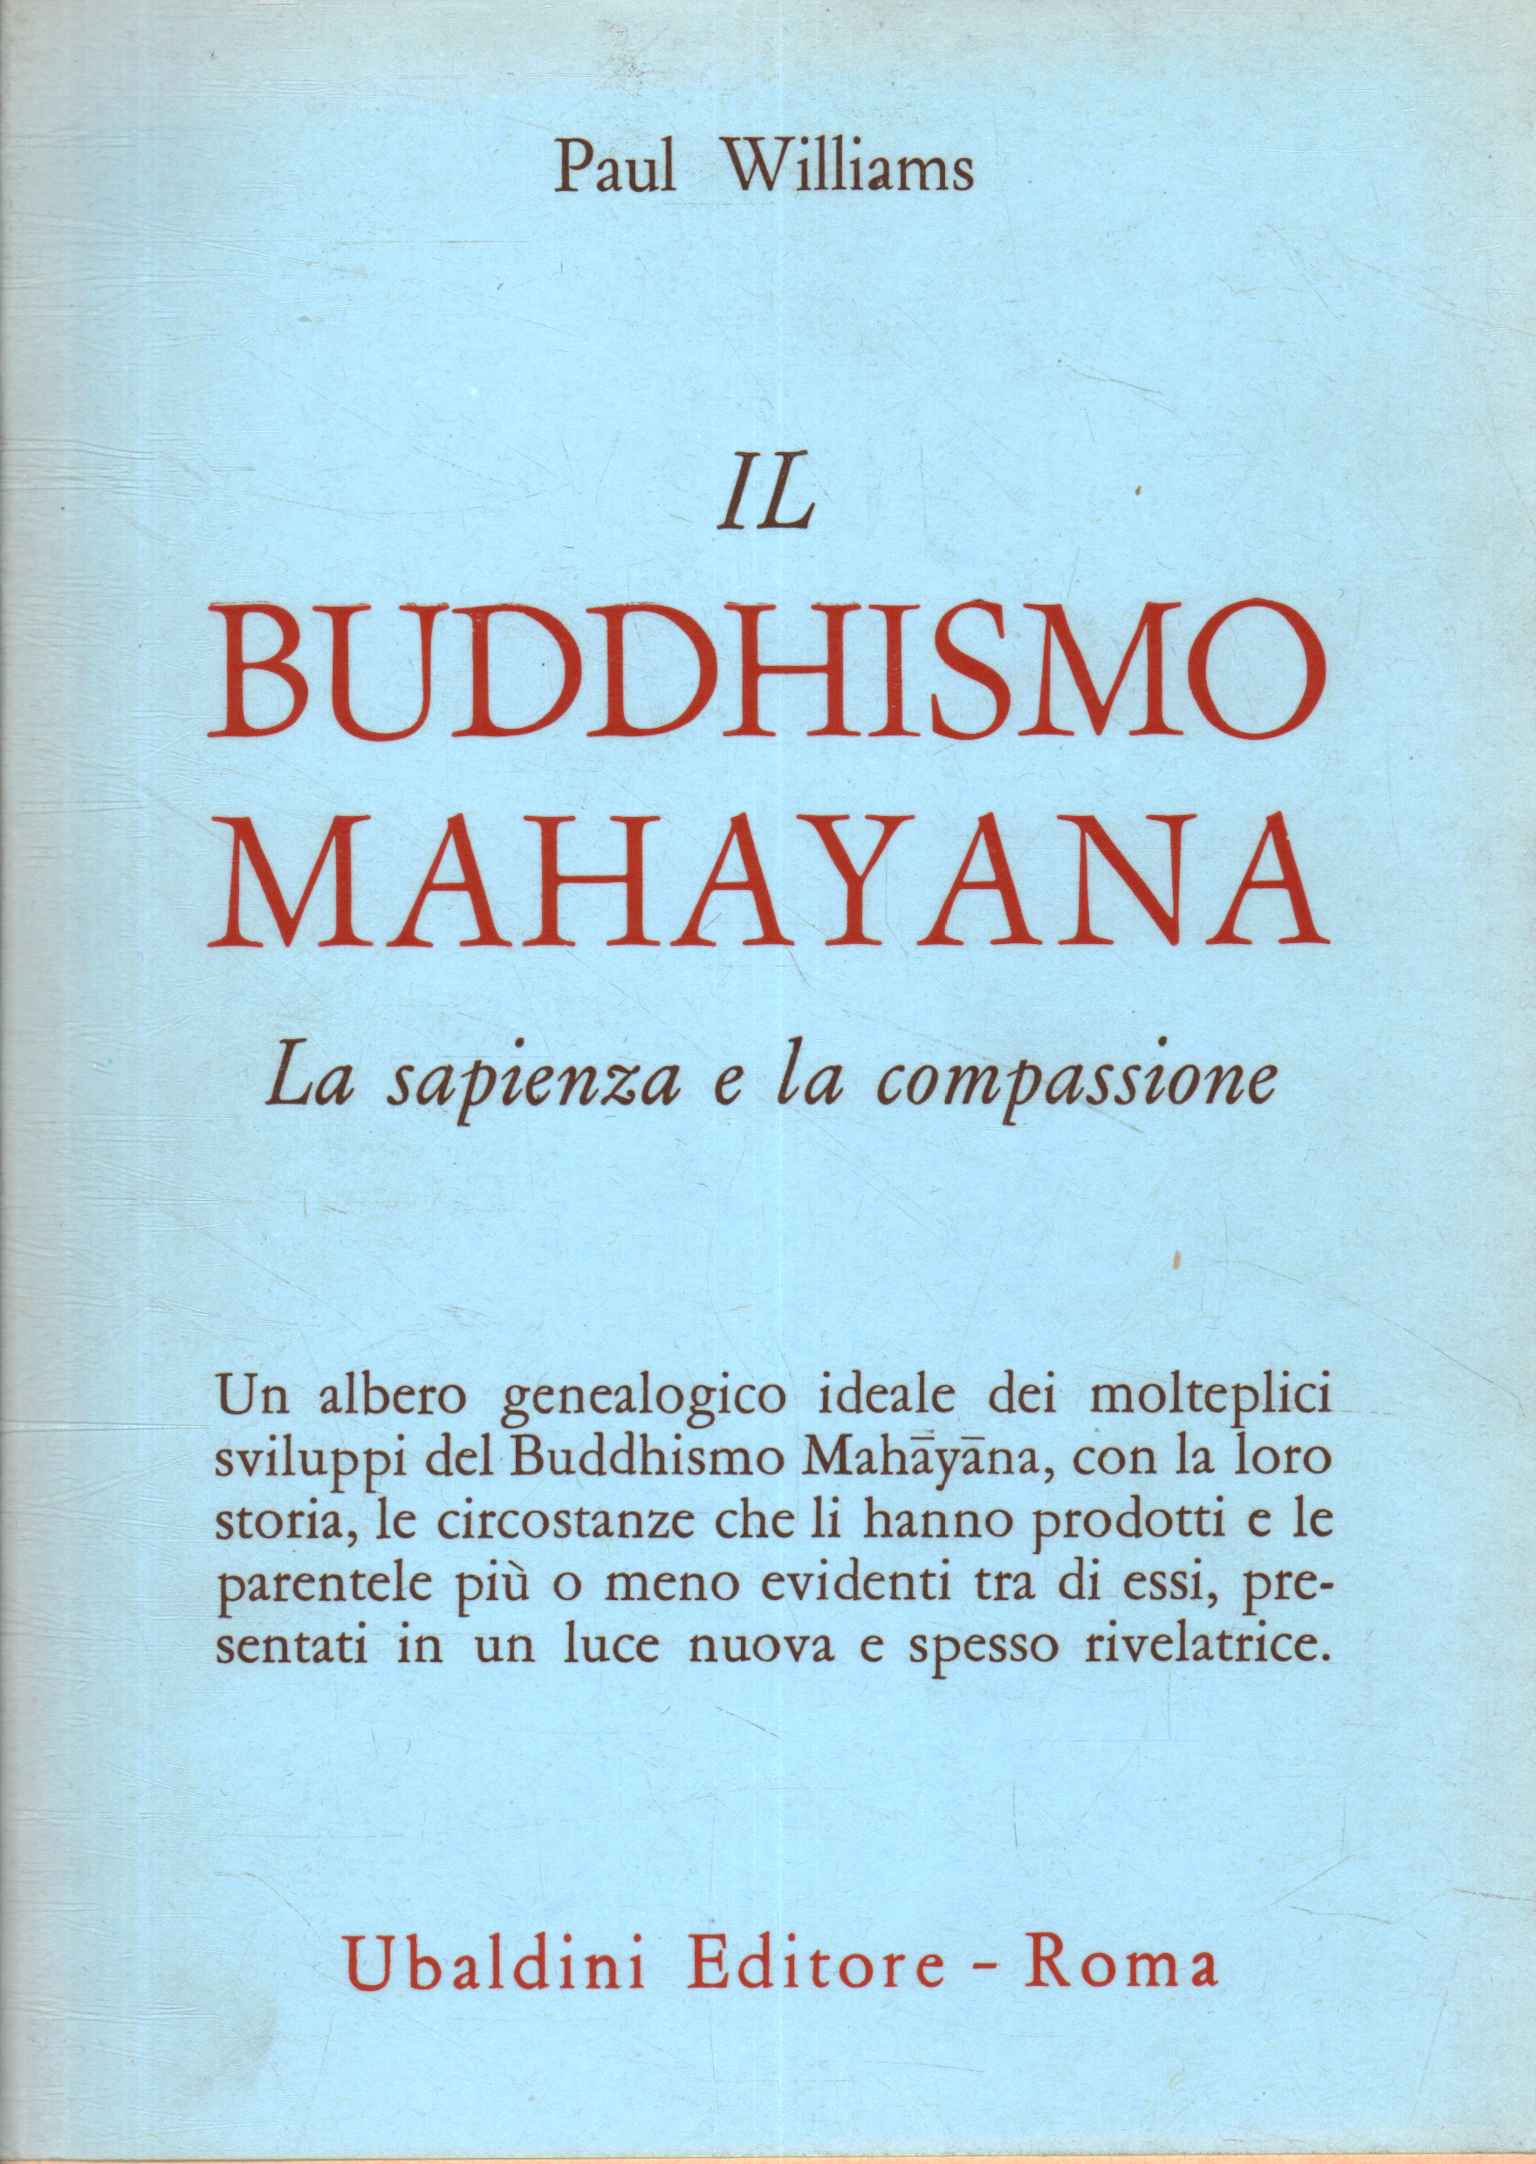 Bouddhisme Mahayana